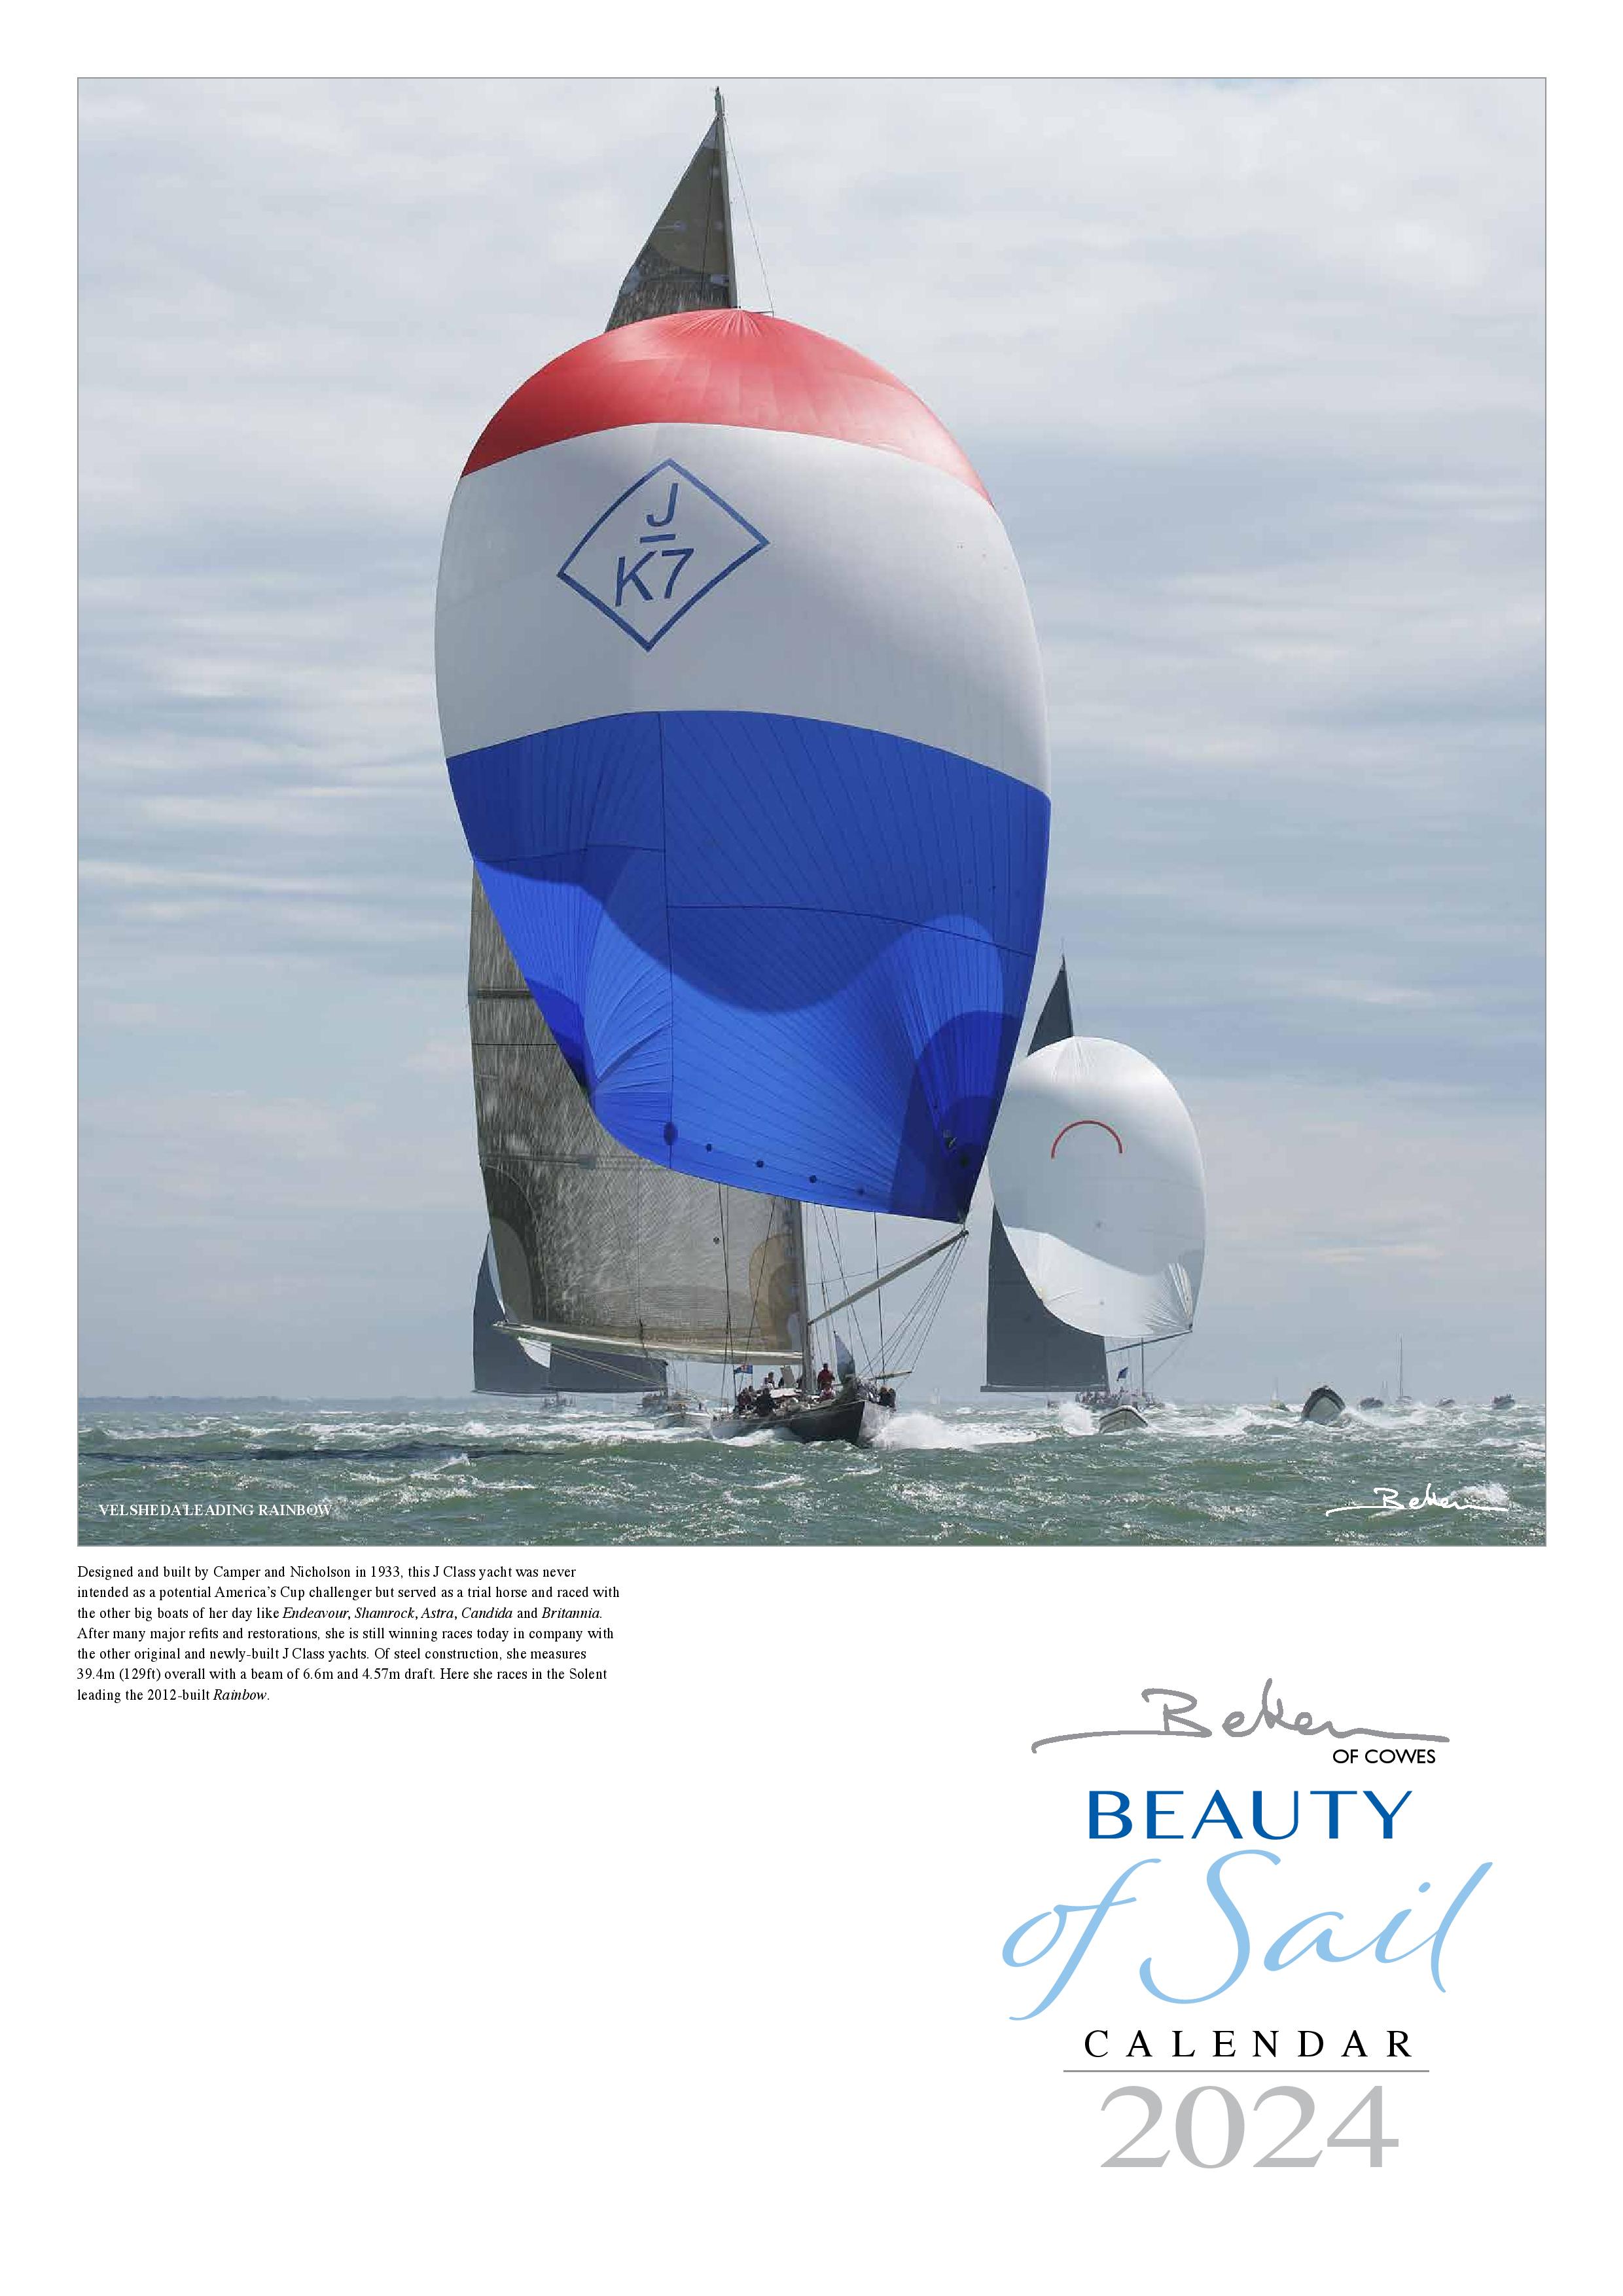 Beauty of Sail